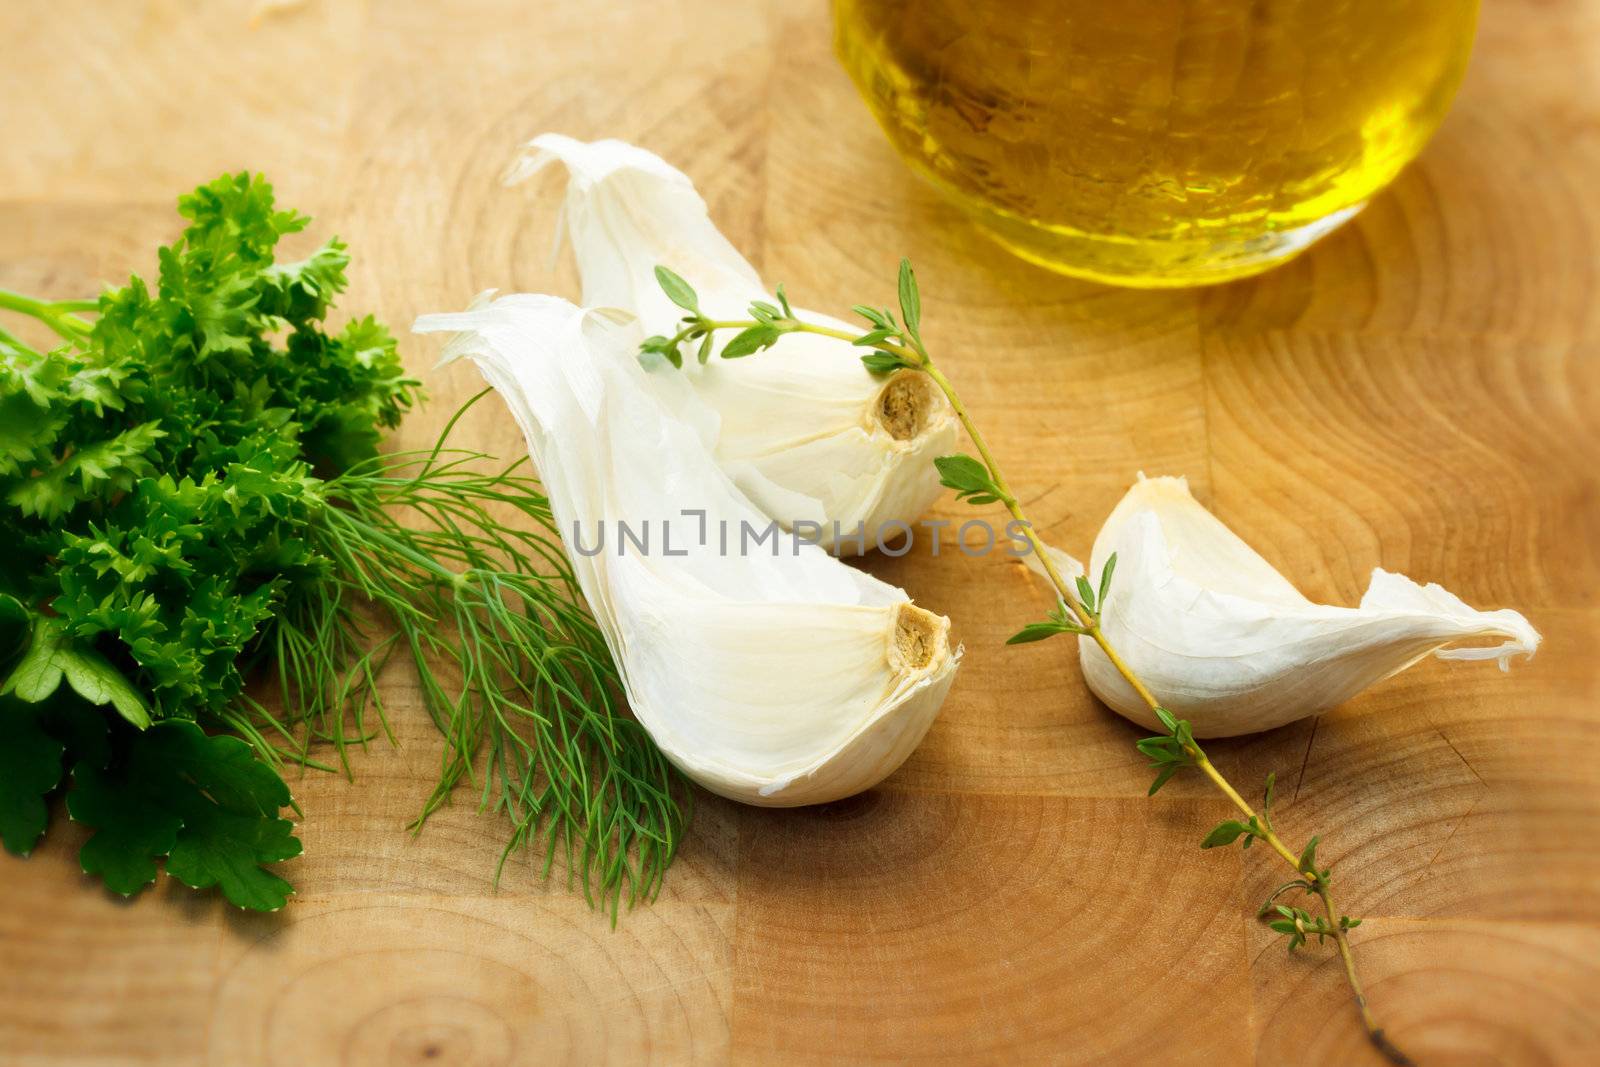 Garlic and herbs by melpomene